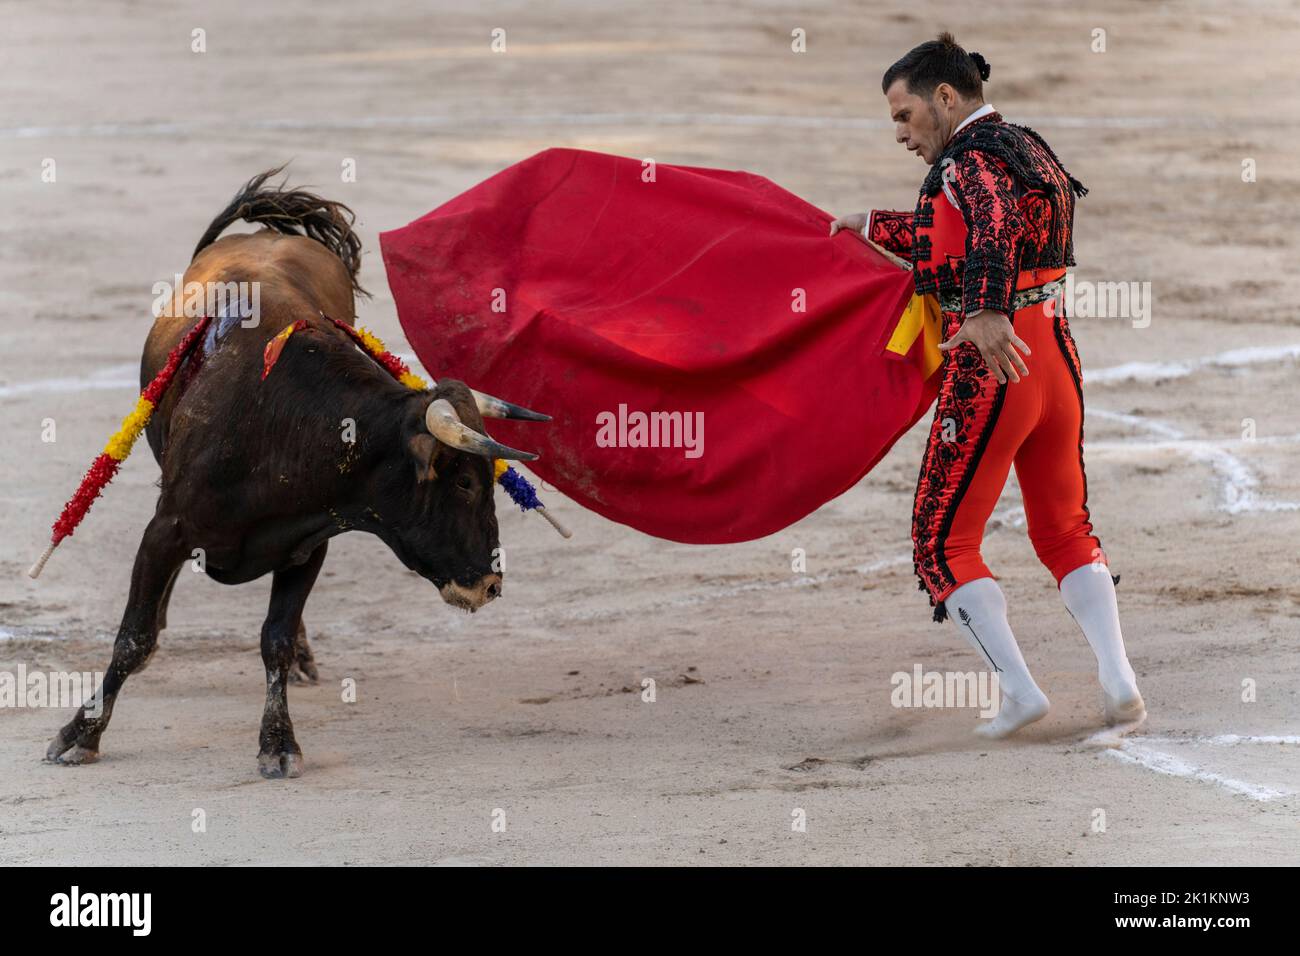 Torero de cortinero, corrida de toros de novillas, Inca, Mallorca, Islas Baleares, España Foto de stock